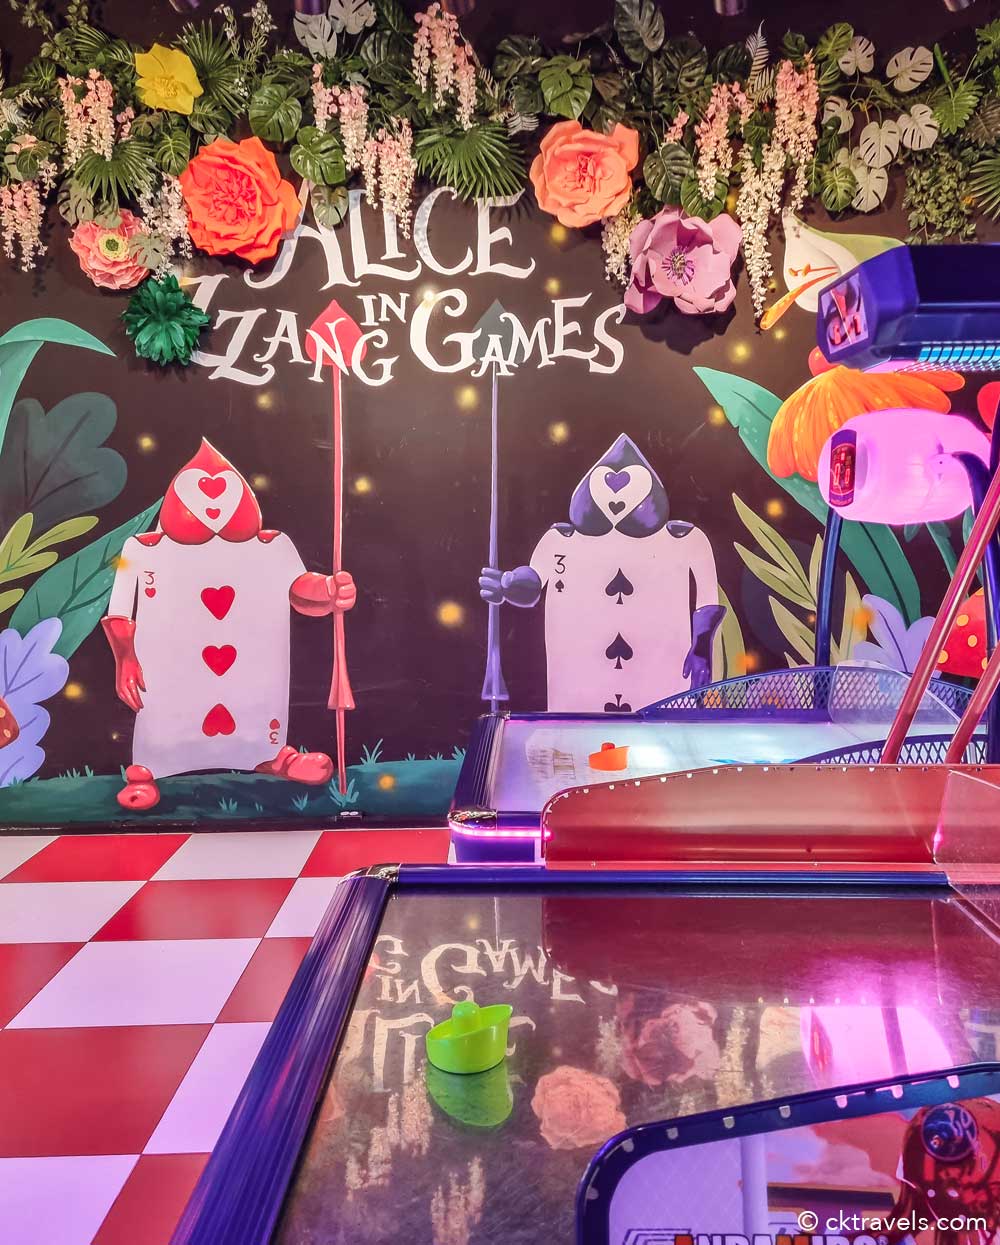 ZZang Games / Alice in Wonderland Themed Arcade Seomyeon 